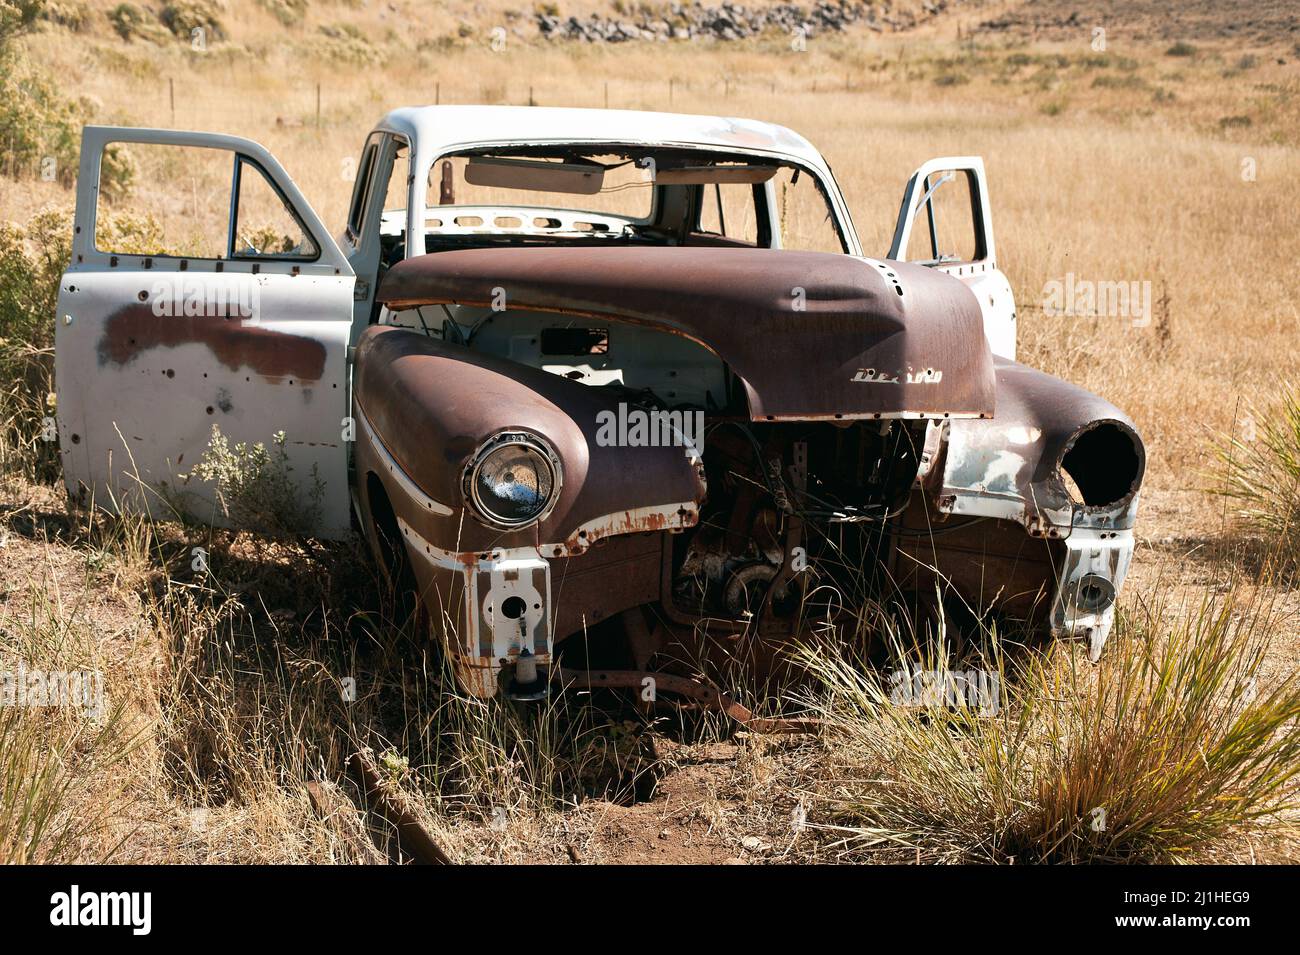 DeSoto (sometimes De Soto) abandoned . 1950 DeSoto automobile. Wreck of deSoto in a dessert like landscape. Abandoned dream. Car wreck. Chrysler make. Stock Photo